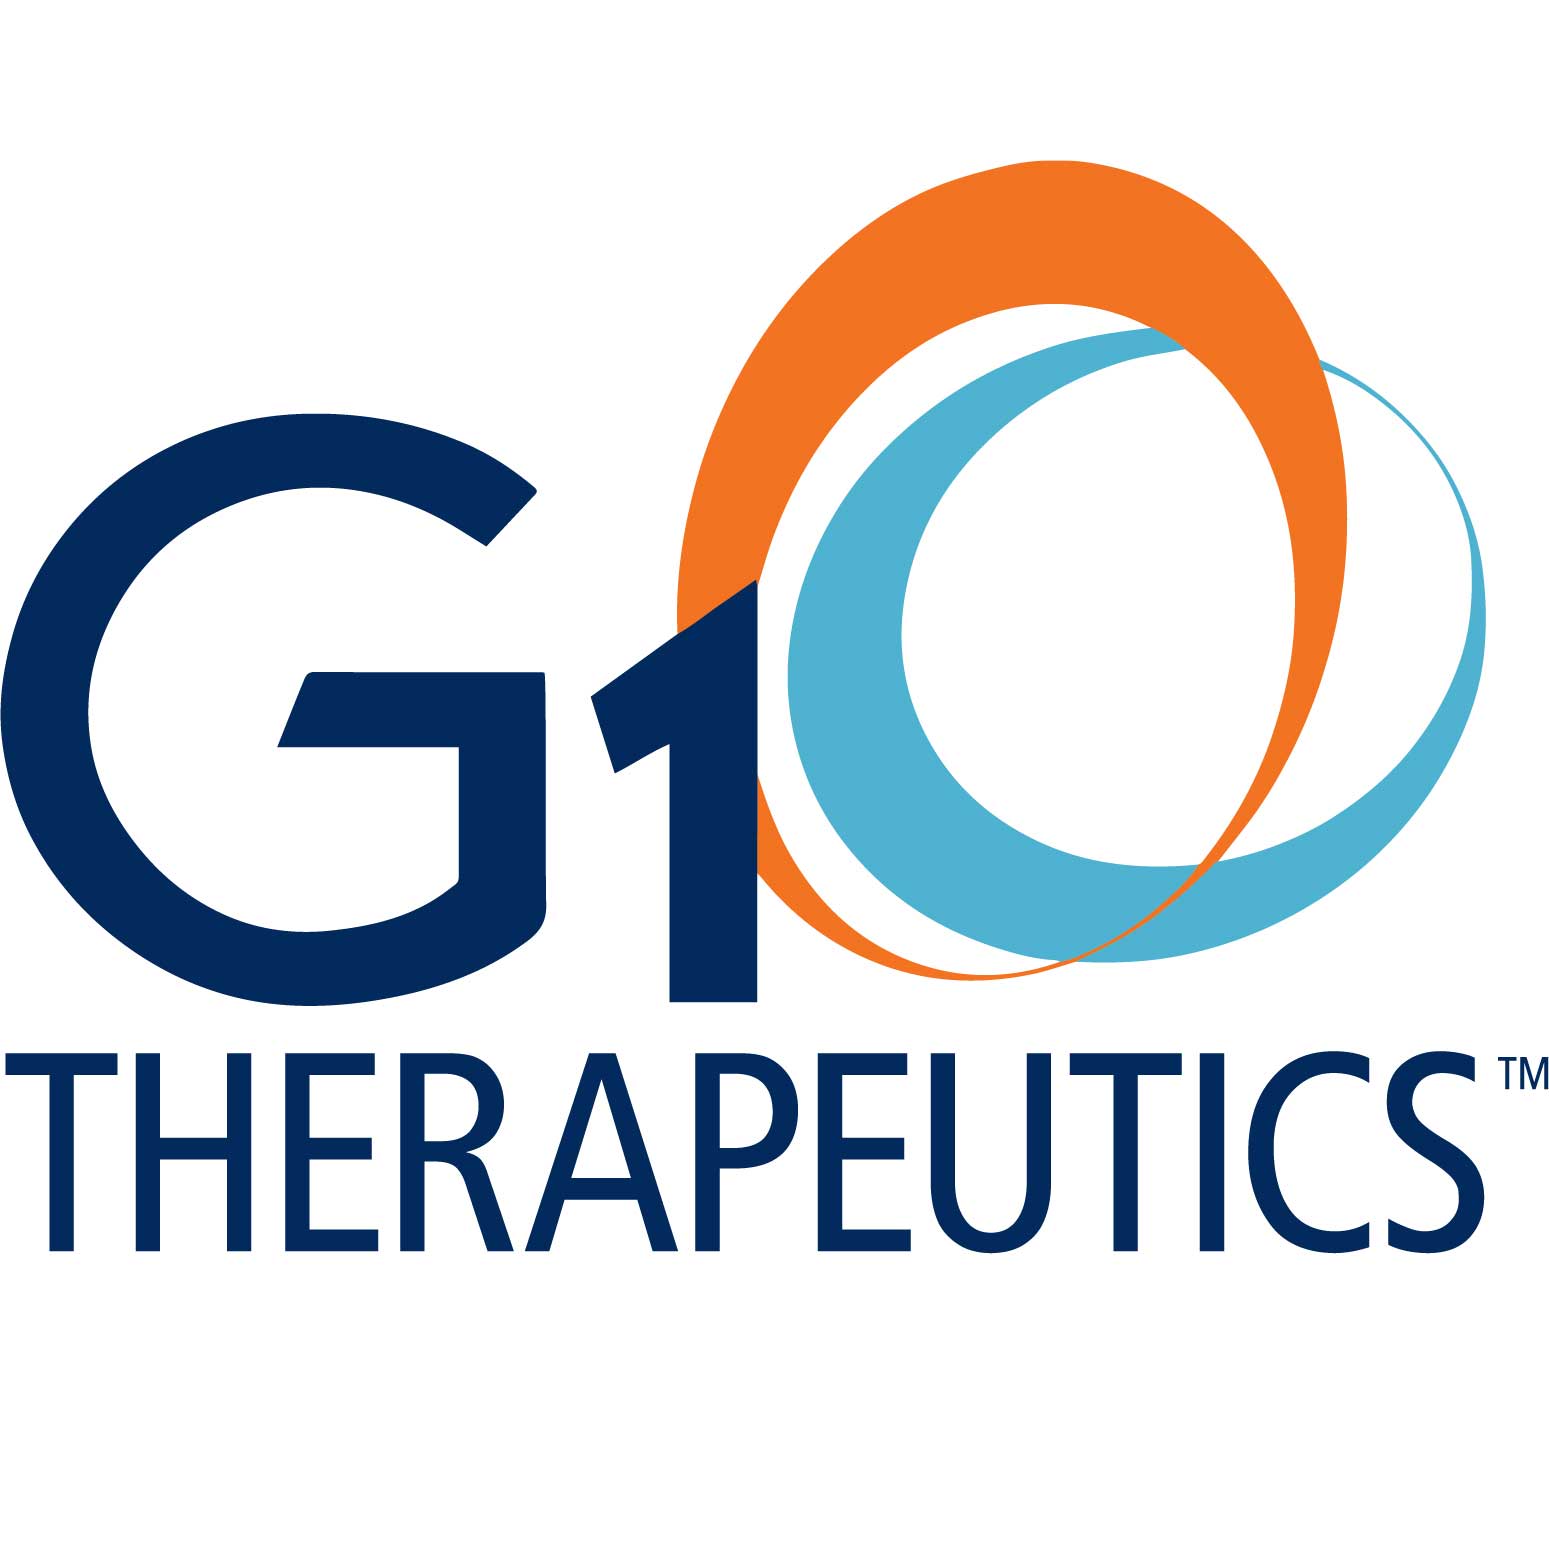 G1 Therapeutics Logo